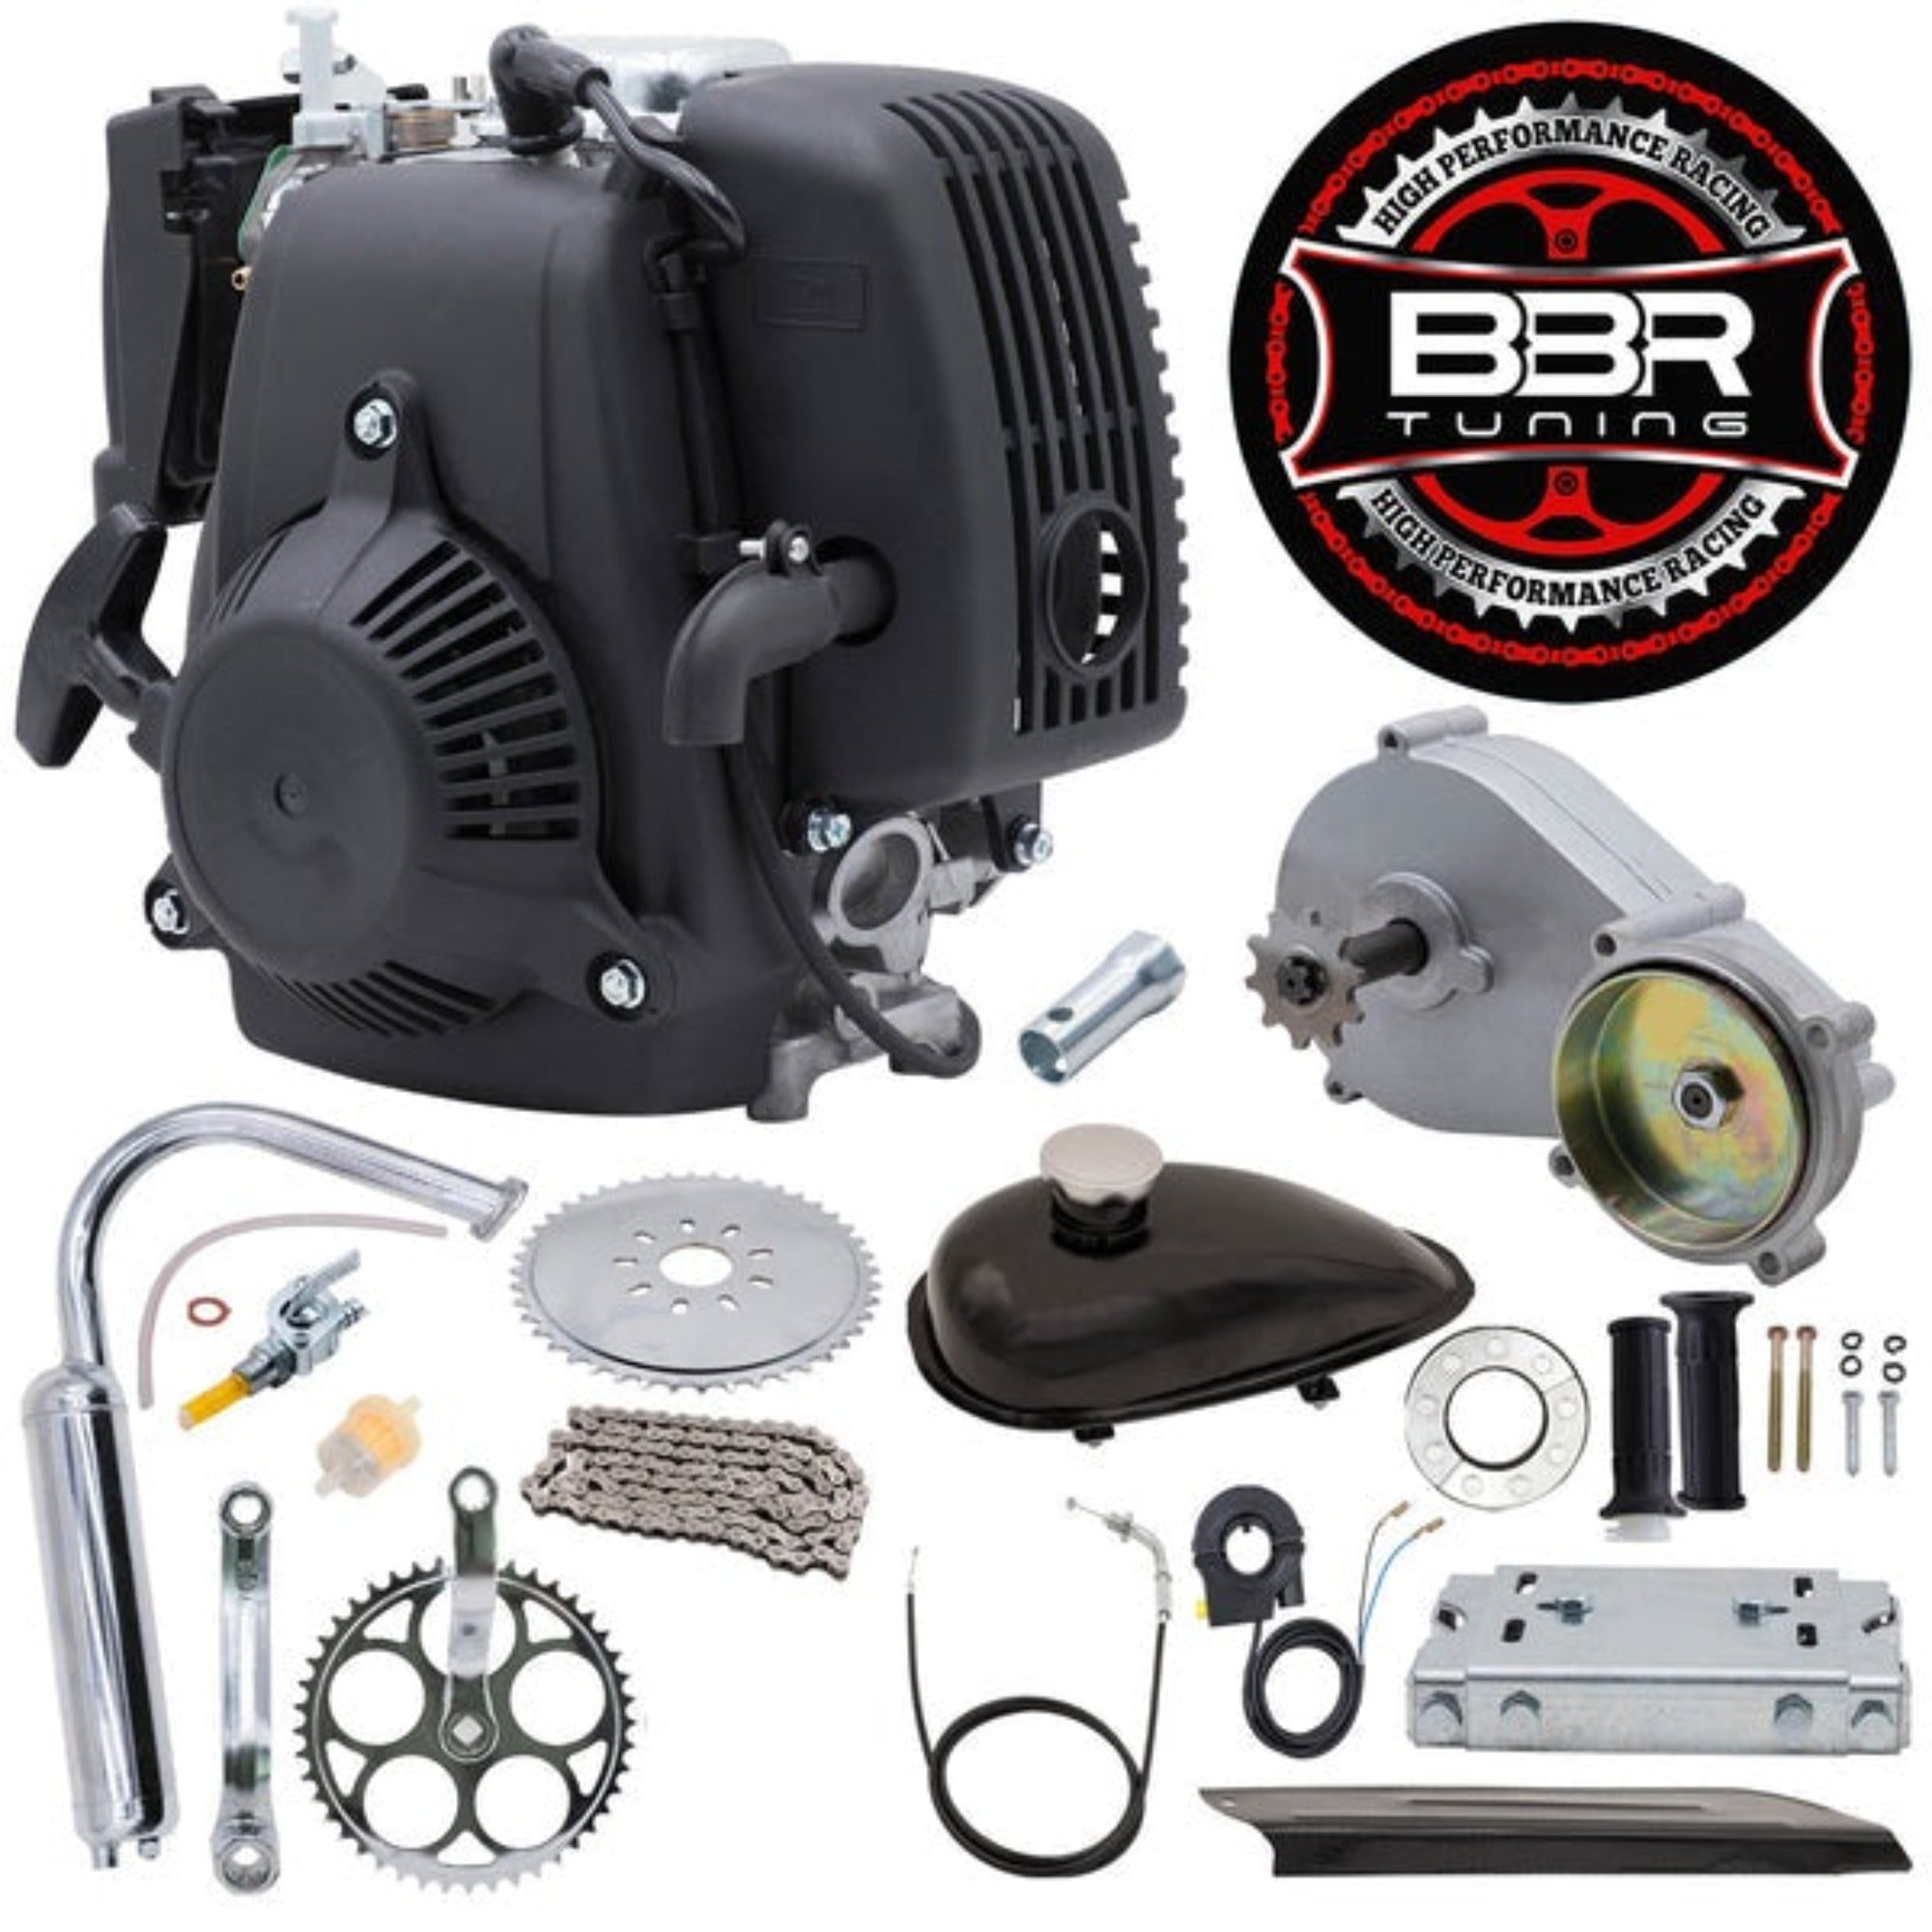 49cc motorized bicycle kits - BBR Tuning 5G Pull Start Bicycle Engine Kit